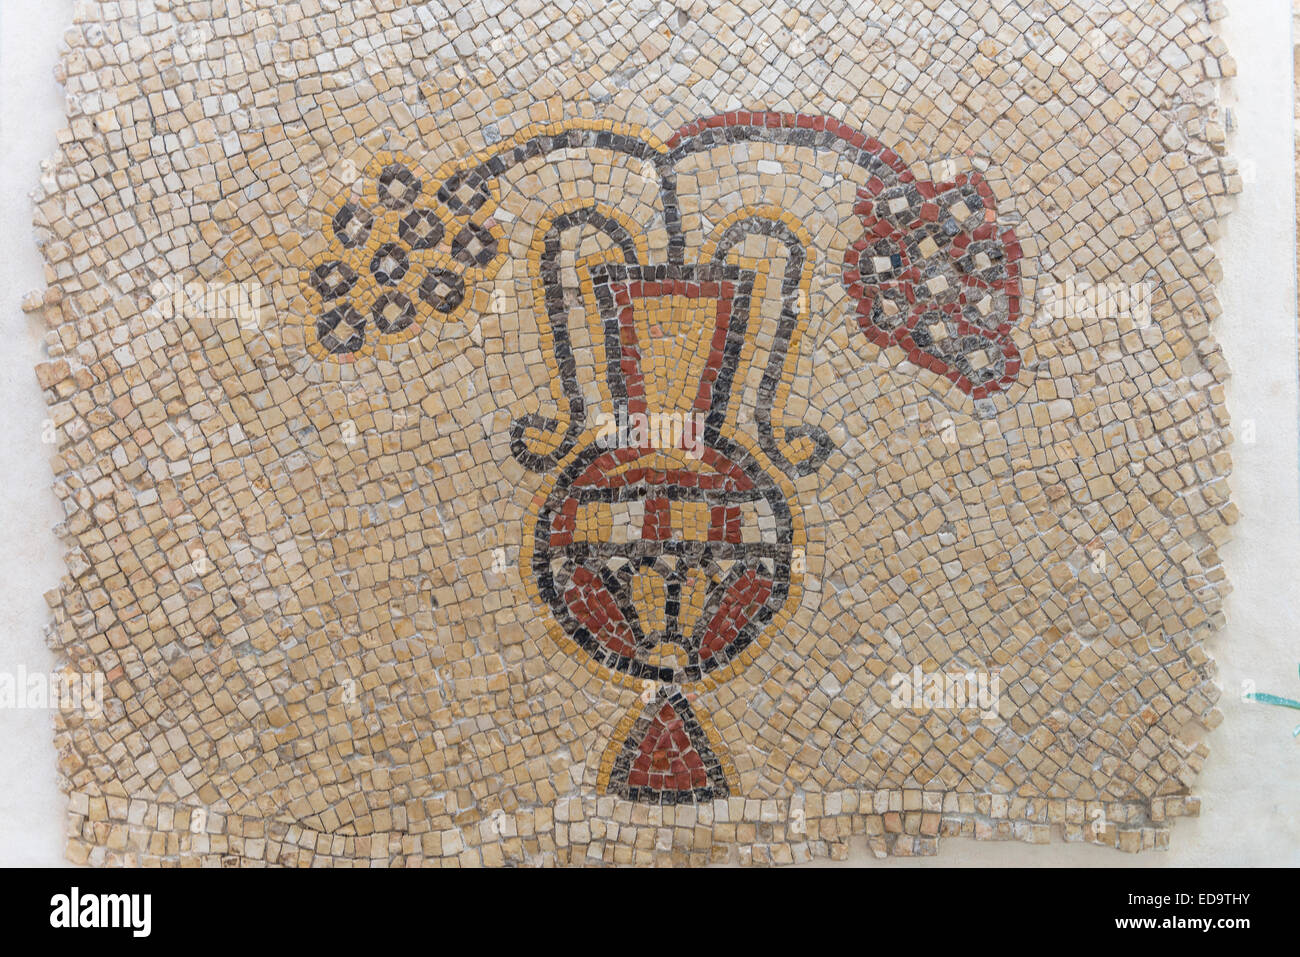 Artist Mosaic Tools Hand Craft Uses Tweezers To Make Mosaic Close Up  Ancient Process Of Making Mosaics Madaba Jordan Stock Photo - Download  Image Now - iStock